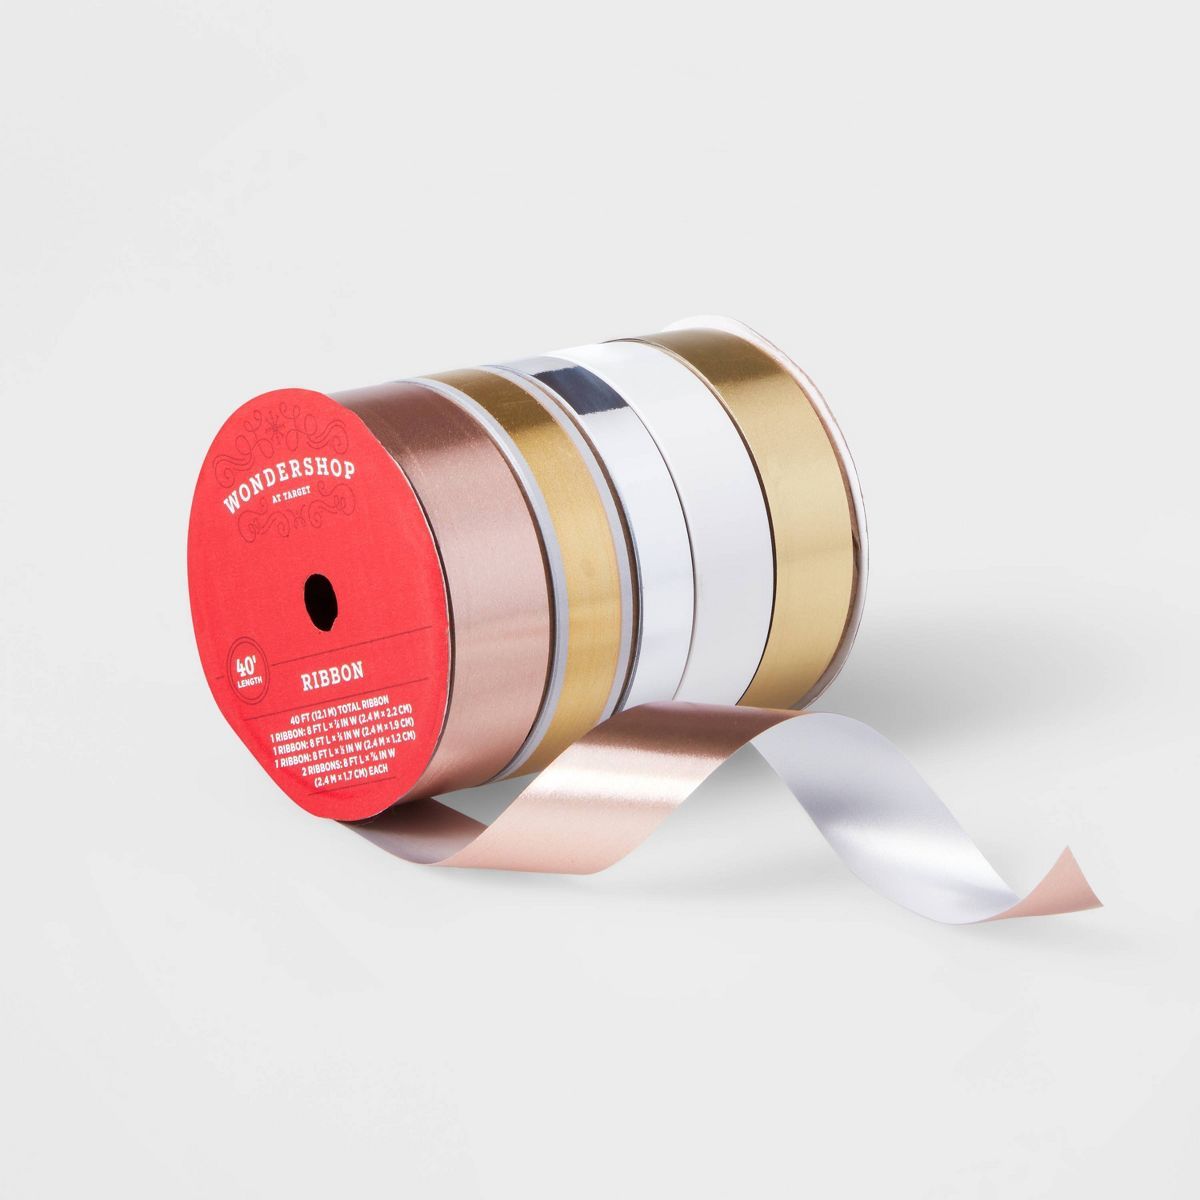 5 End Flat Christmas Ribbon 40' Gold/White/Silver - Wondershop™ | Target